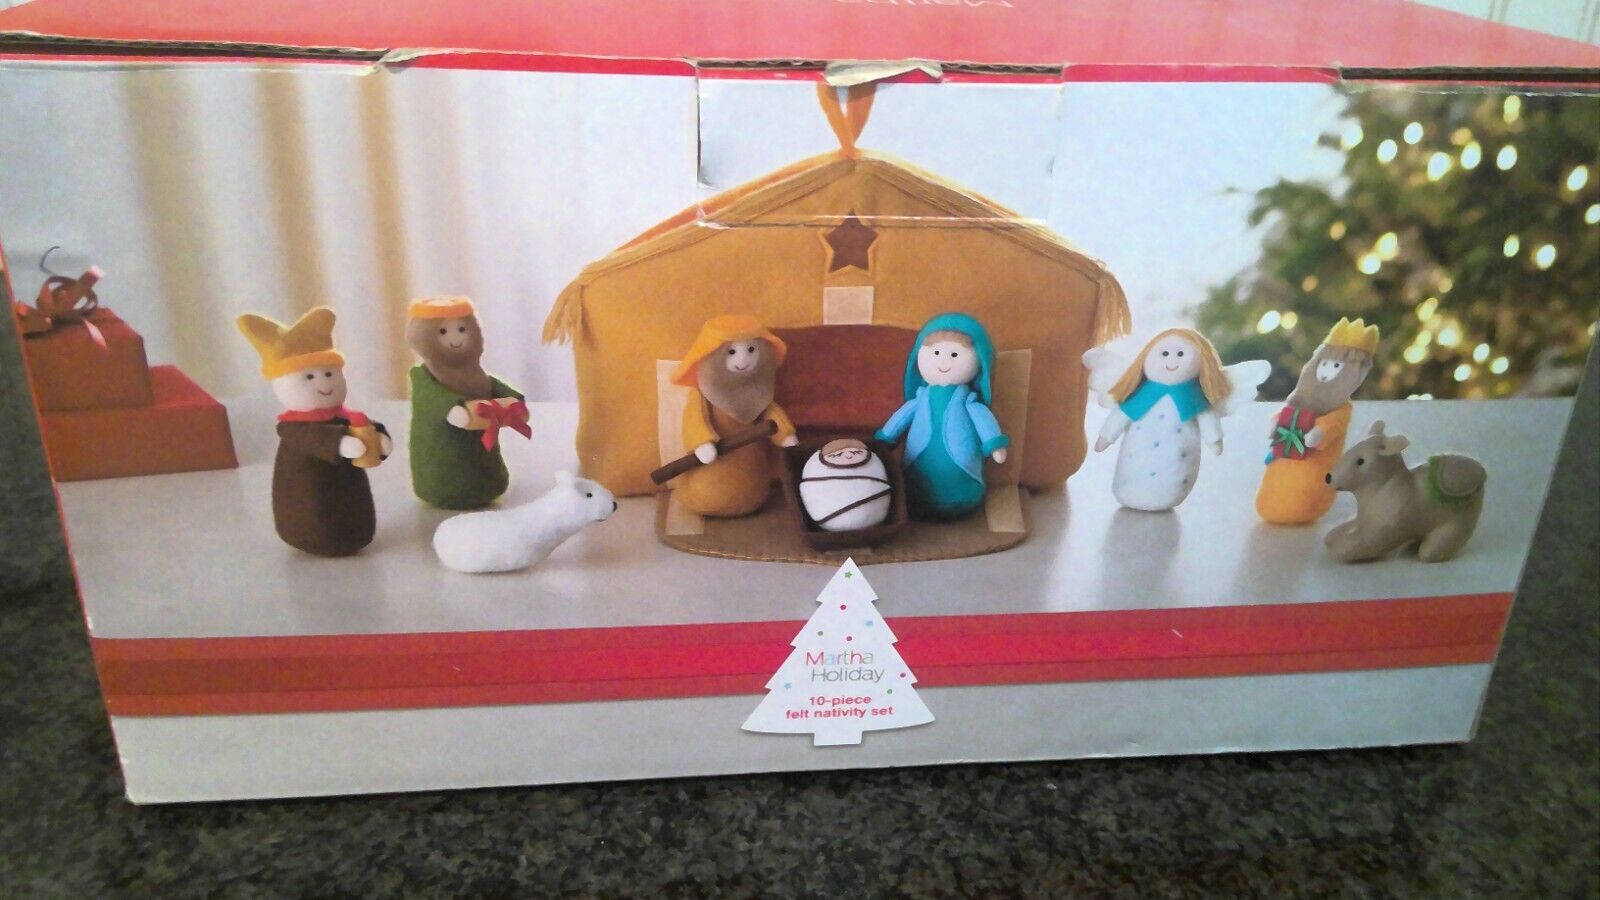 Martha Stewart Holiday 2014 10 Piece Felt Nativity Christmas Discontinued/Retire